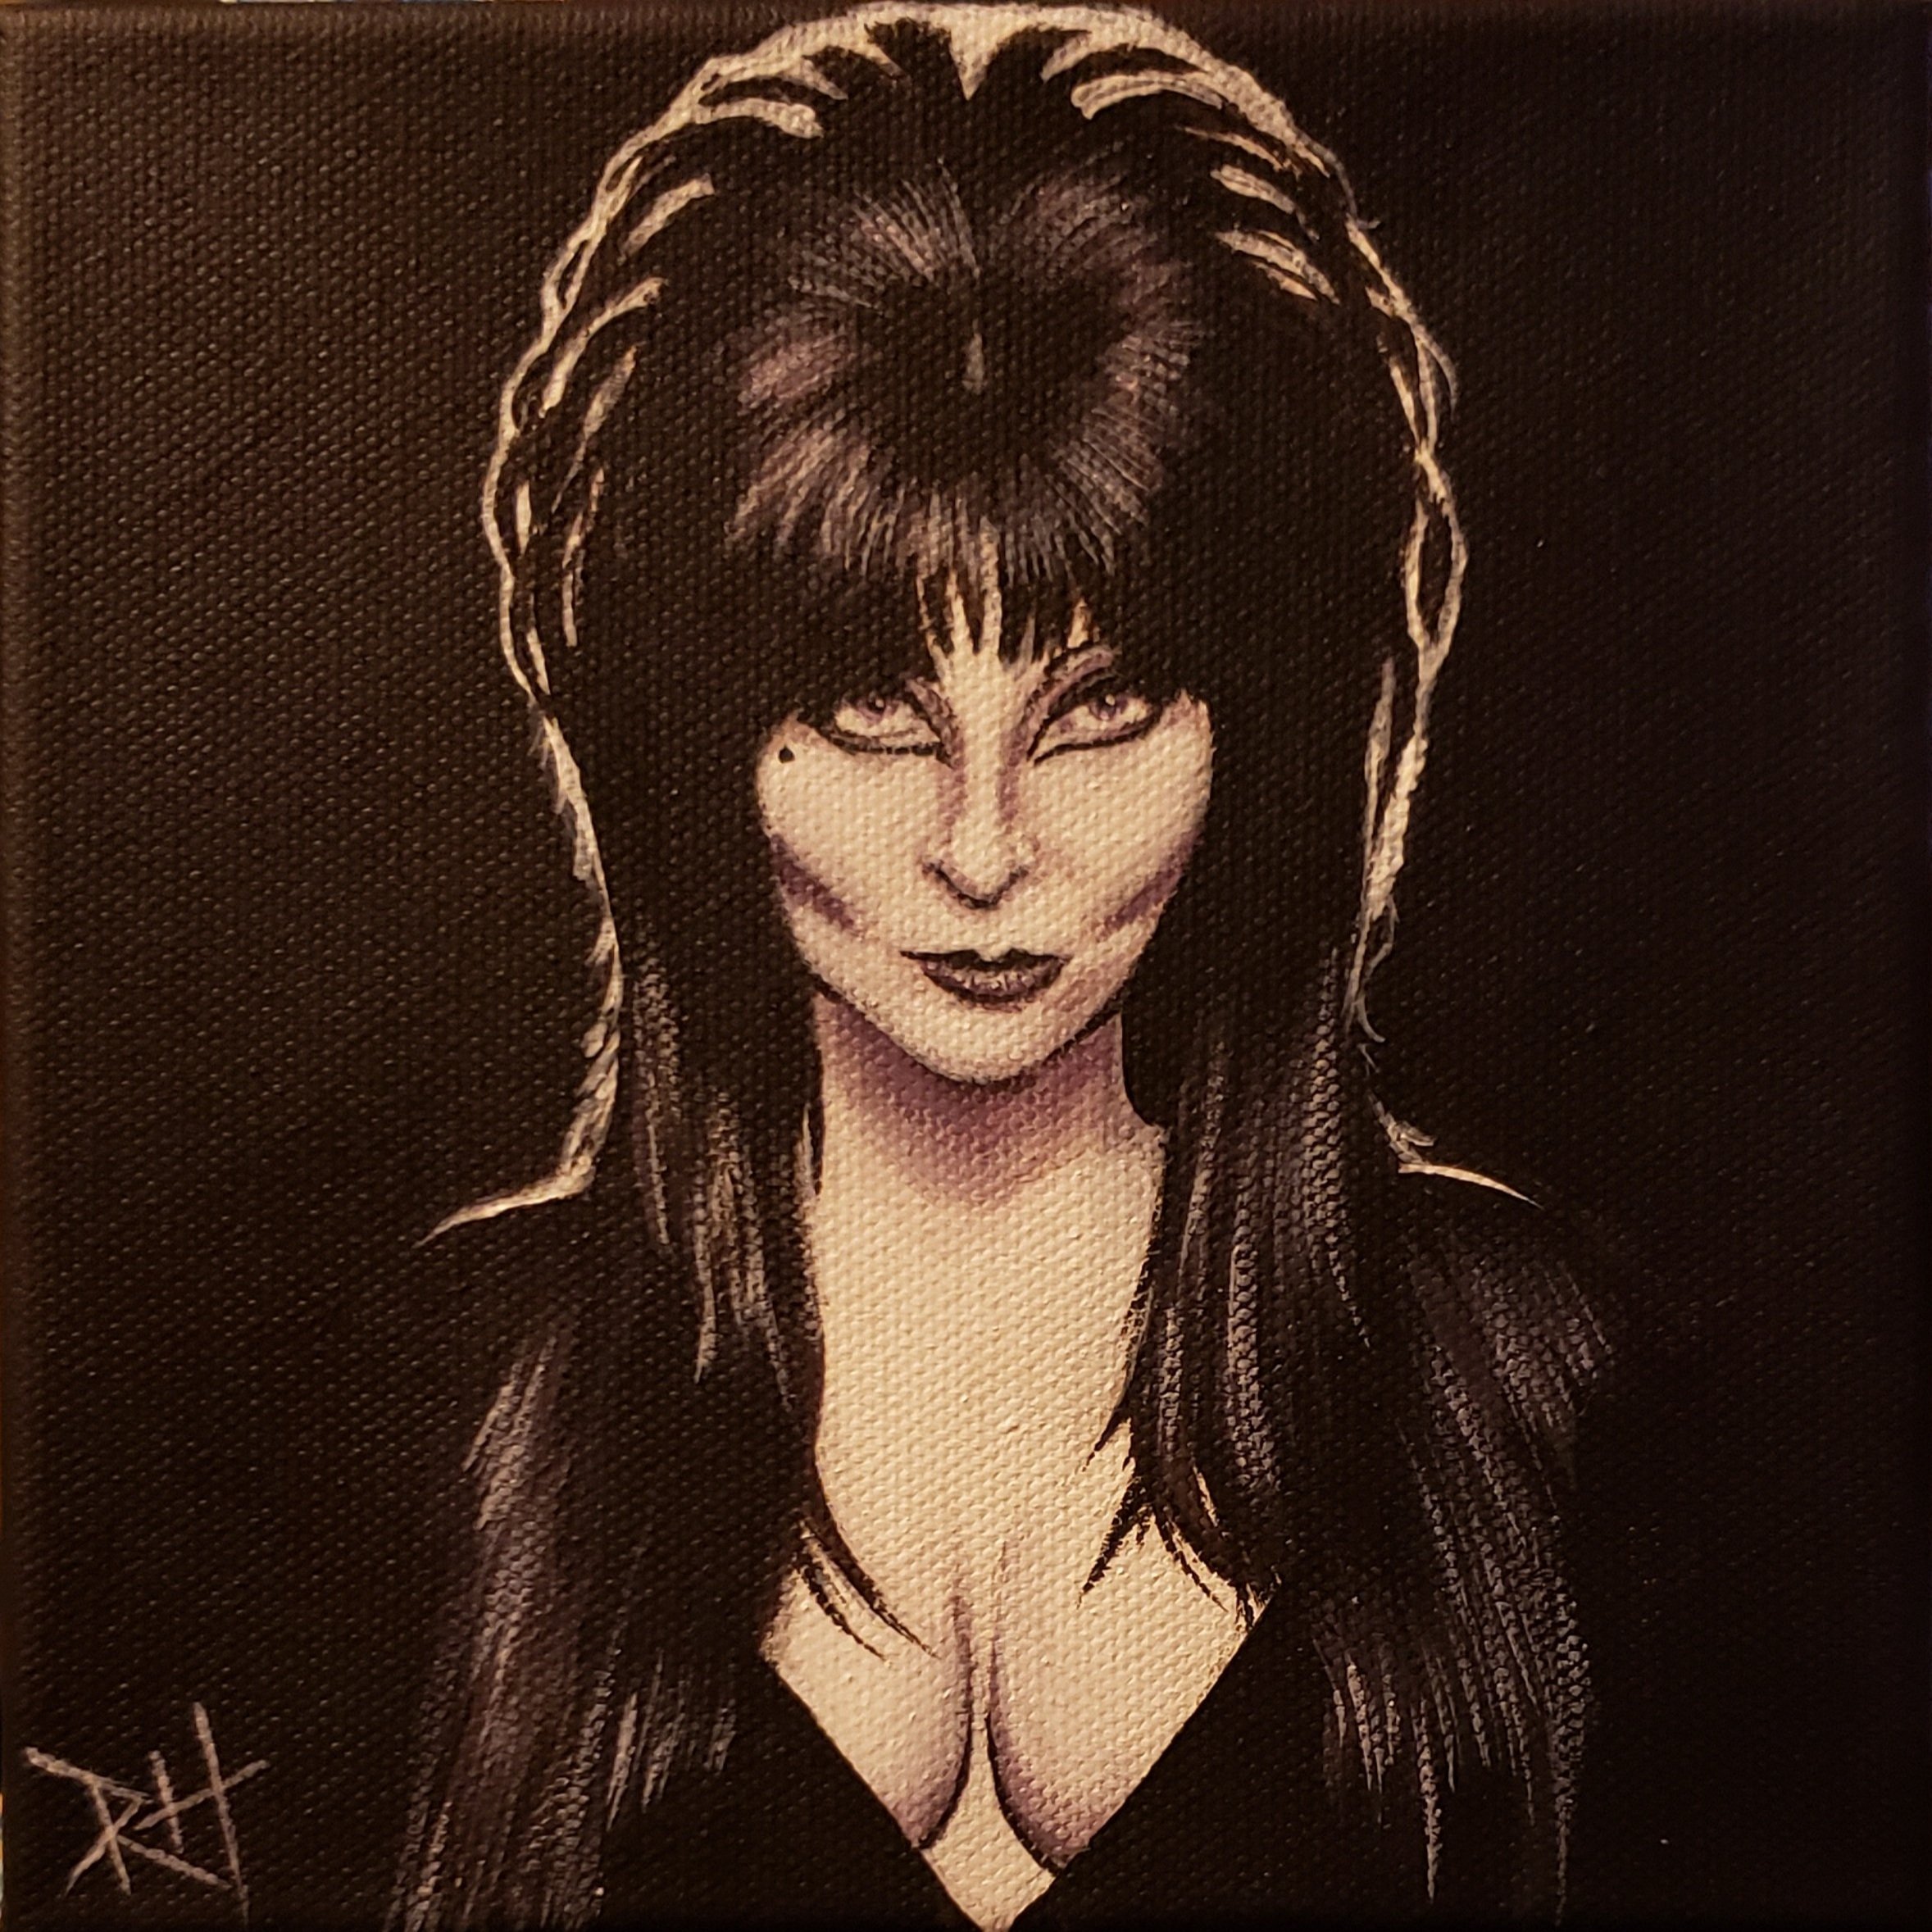 "Elvira for Mary"